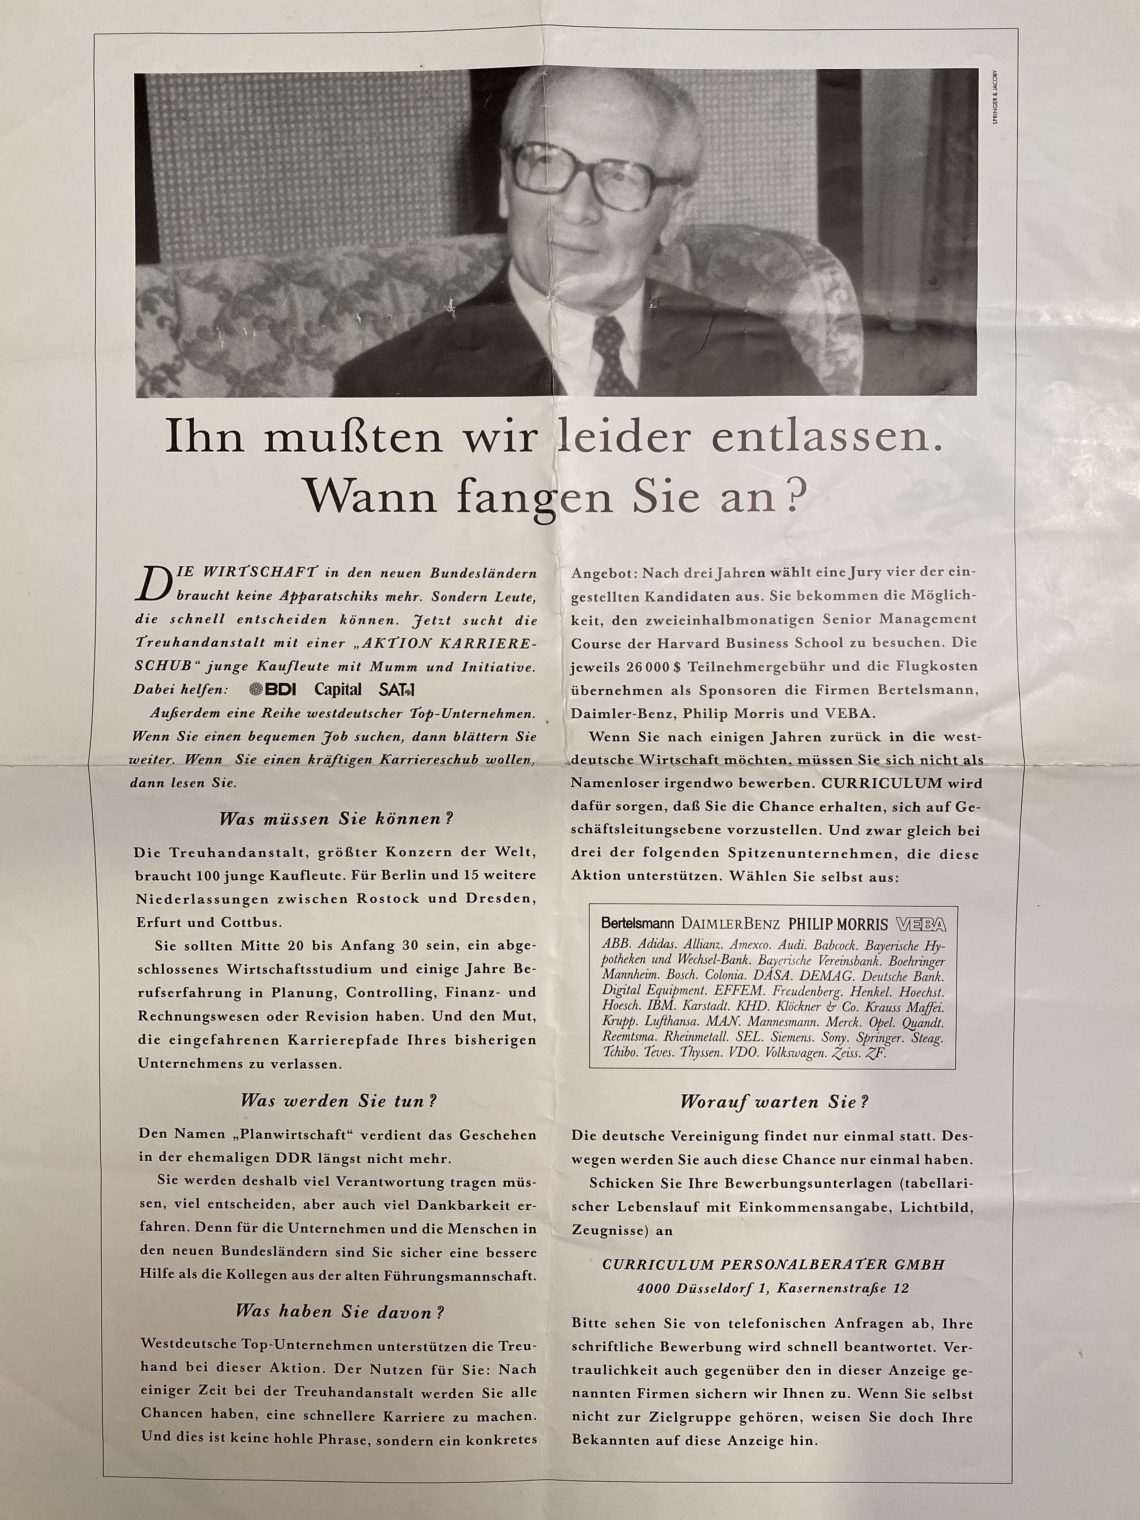 Instant messages by Marcus W. Mosen: #2 - Sozialistisches Phantasialand Berlin 